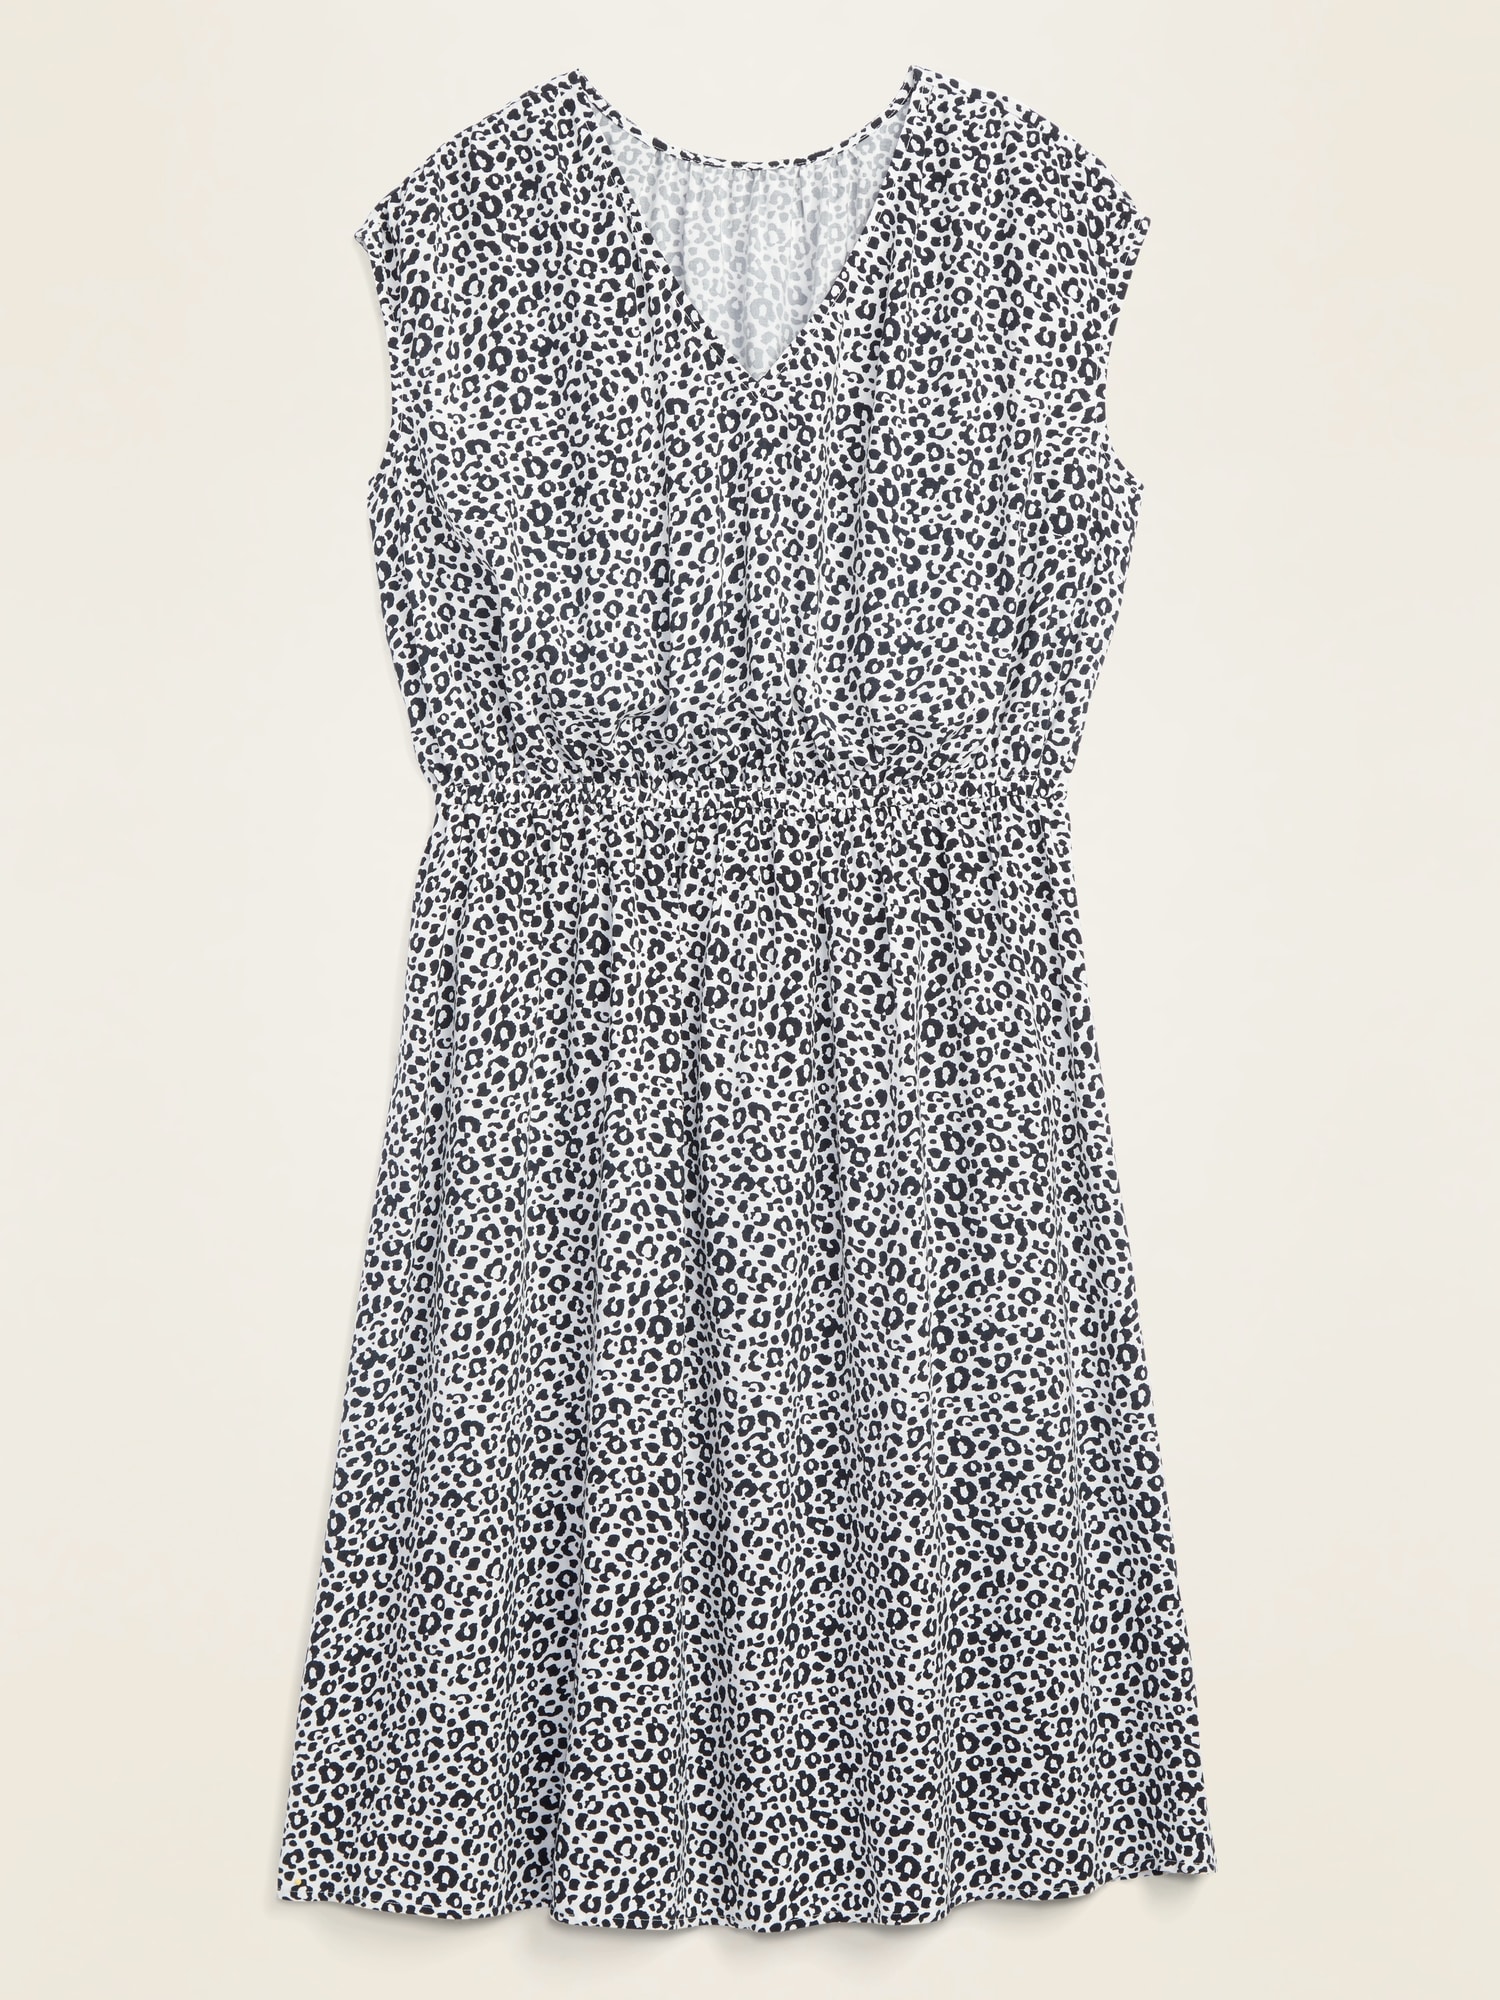 old navy gray dress